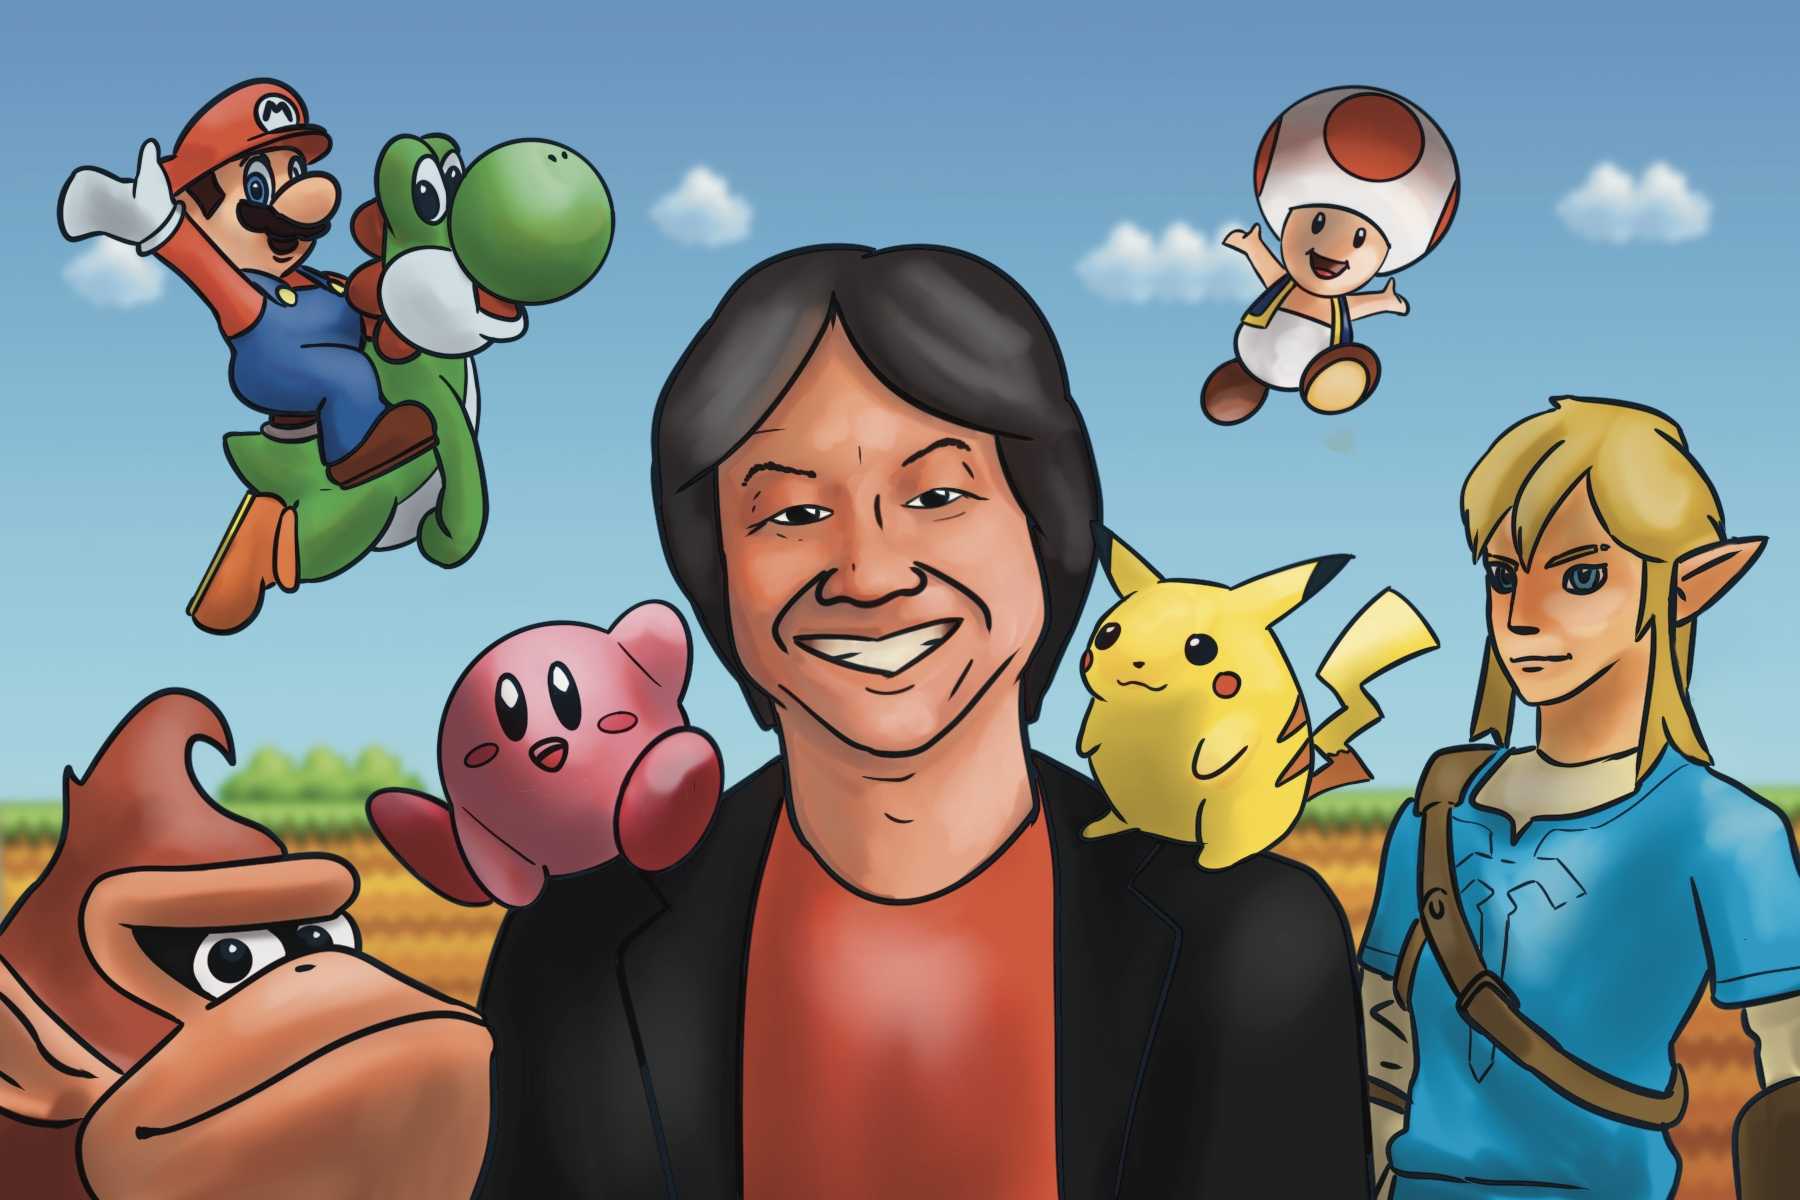 Don't Compare Him To Disney: Nintendo's Shigeru Miyamoto on The